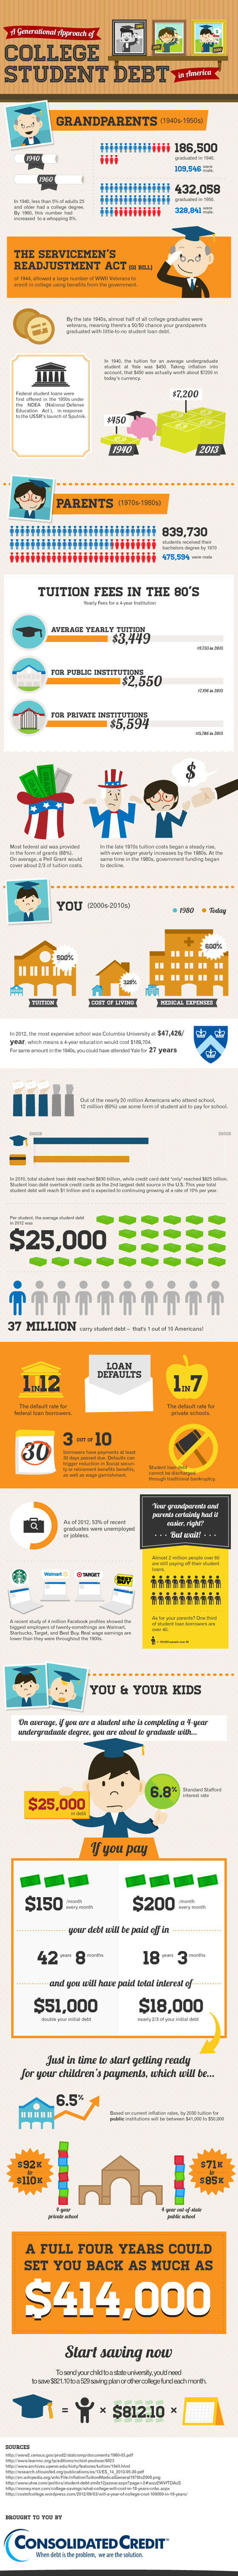 College Student Loan Debt in America